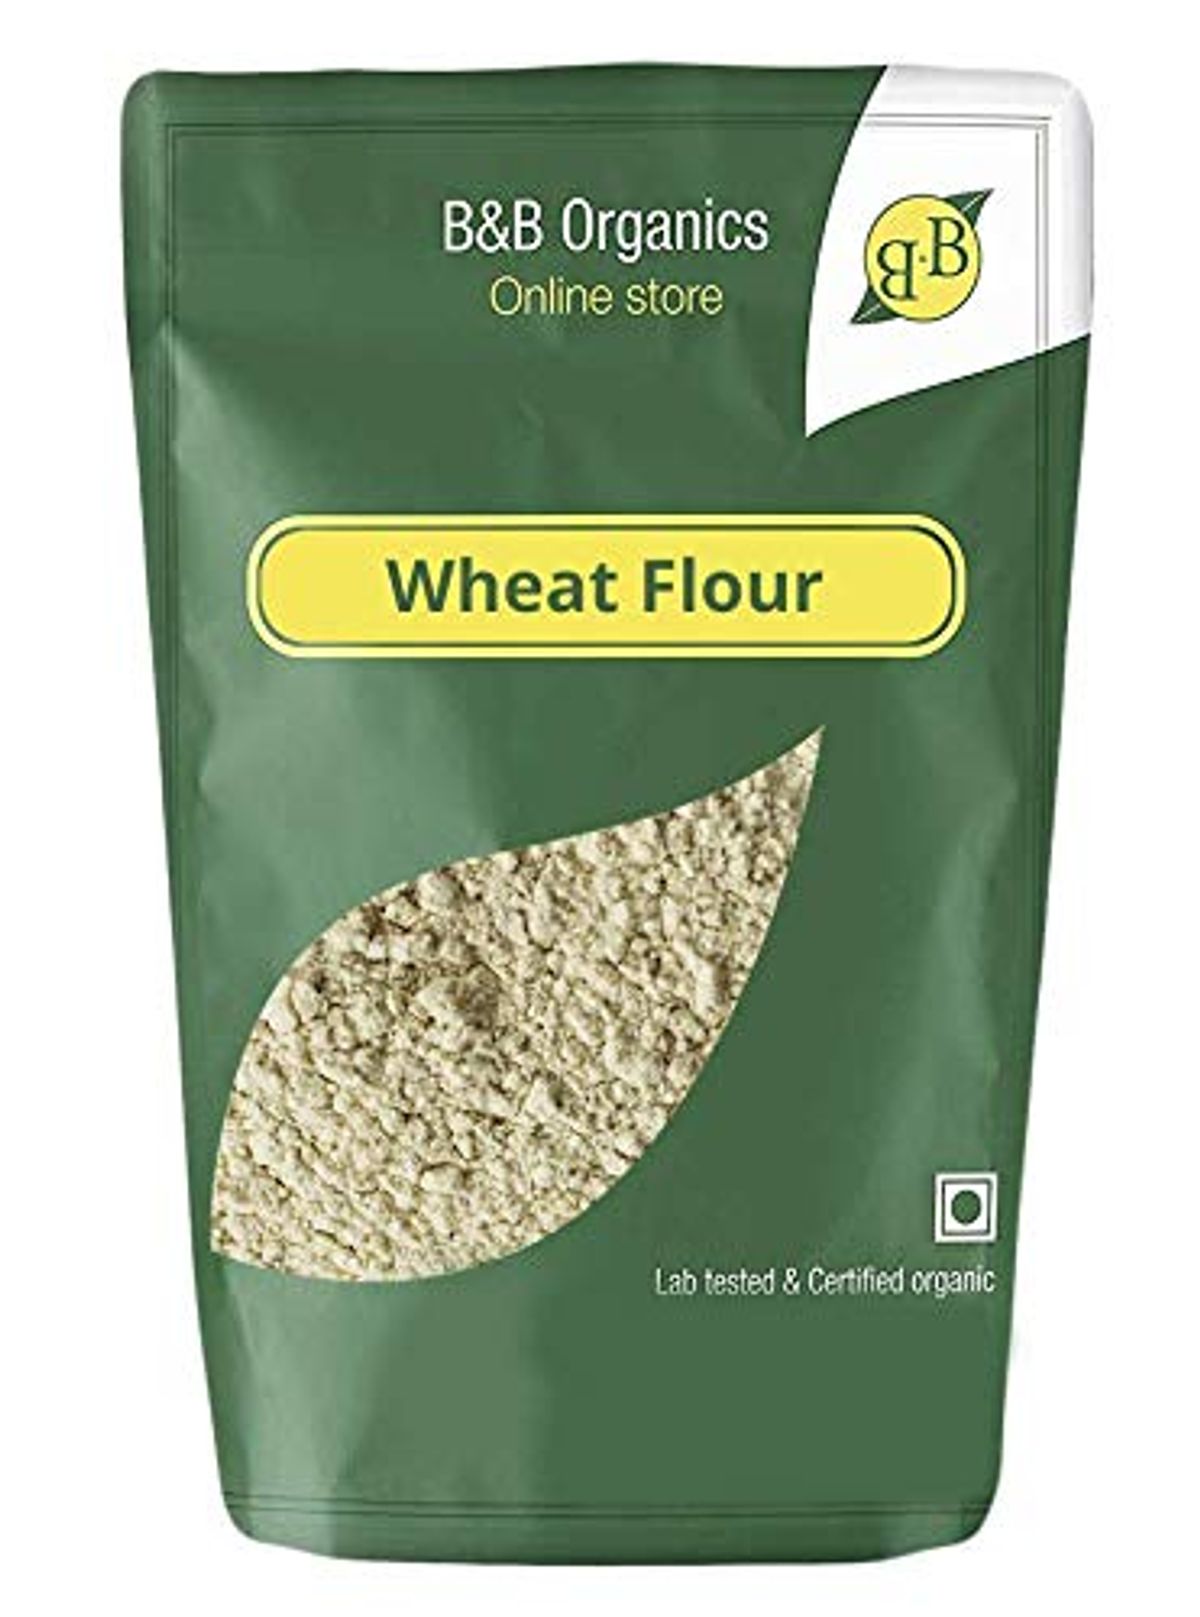 B&B Organics Wheat Flour Image